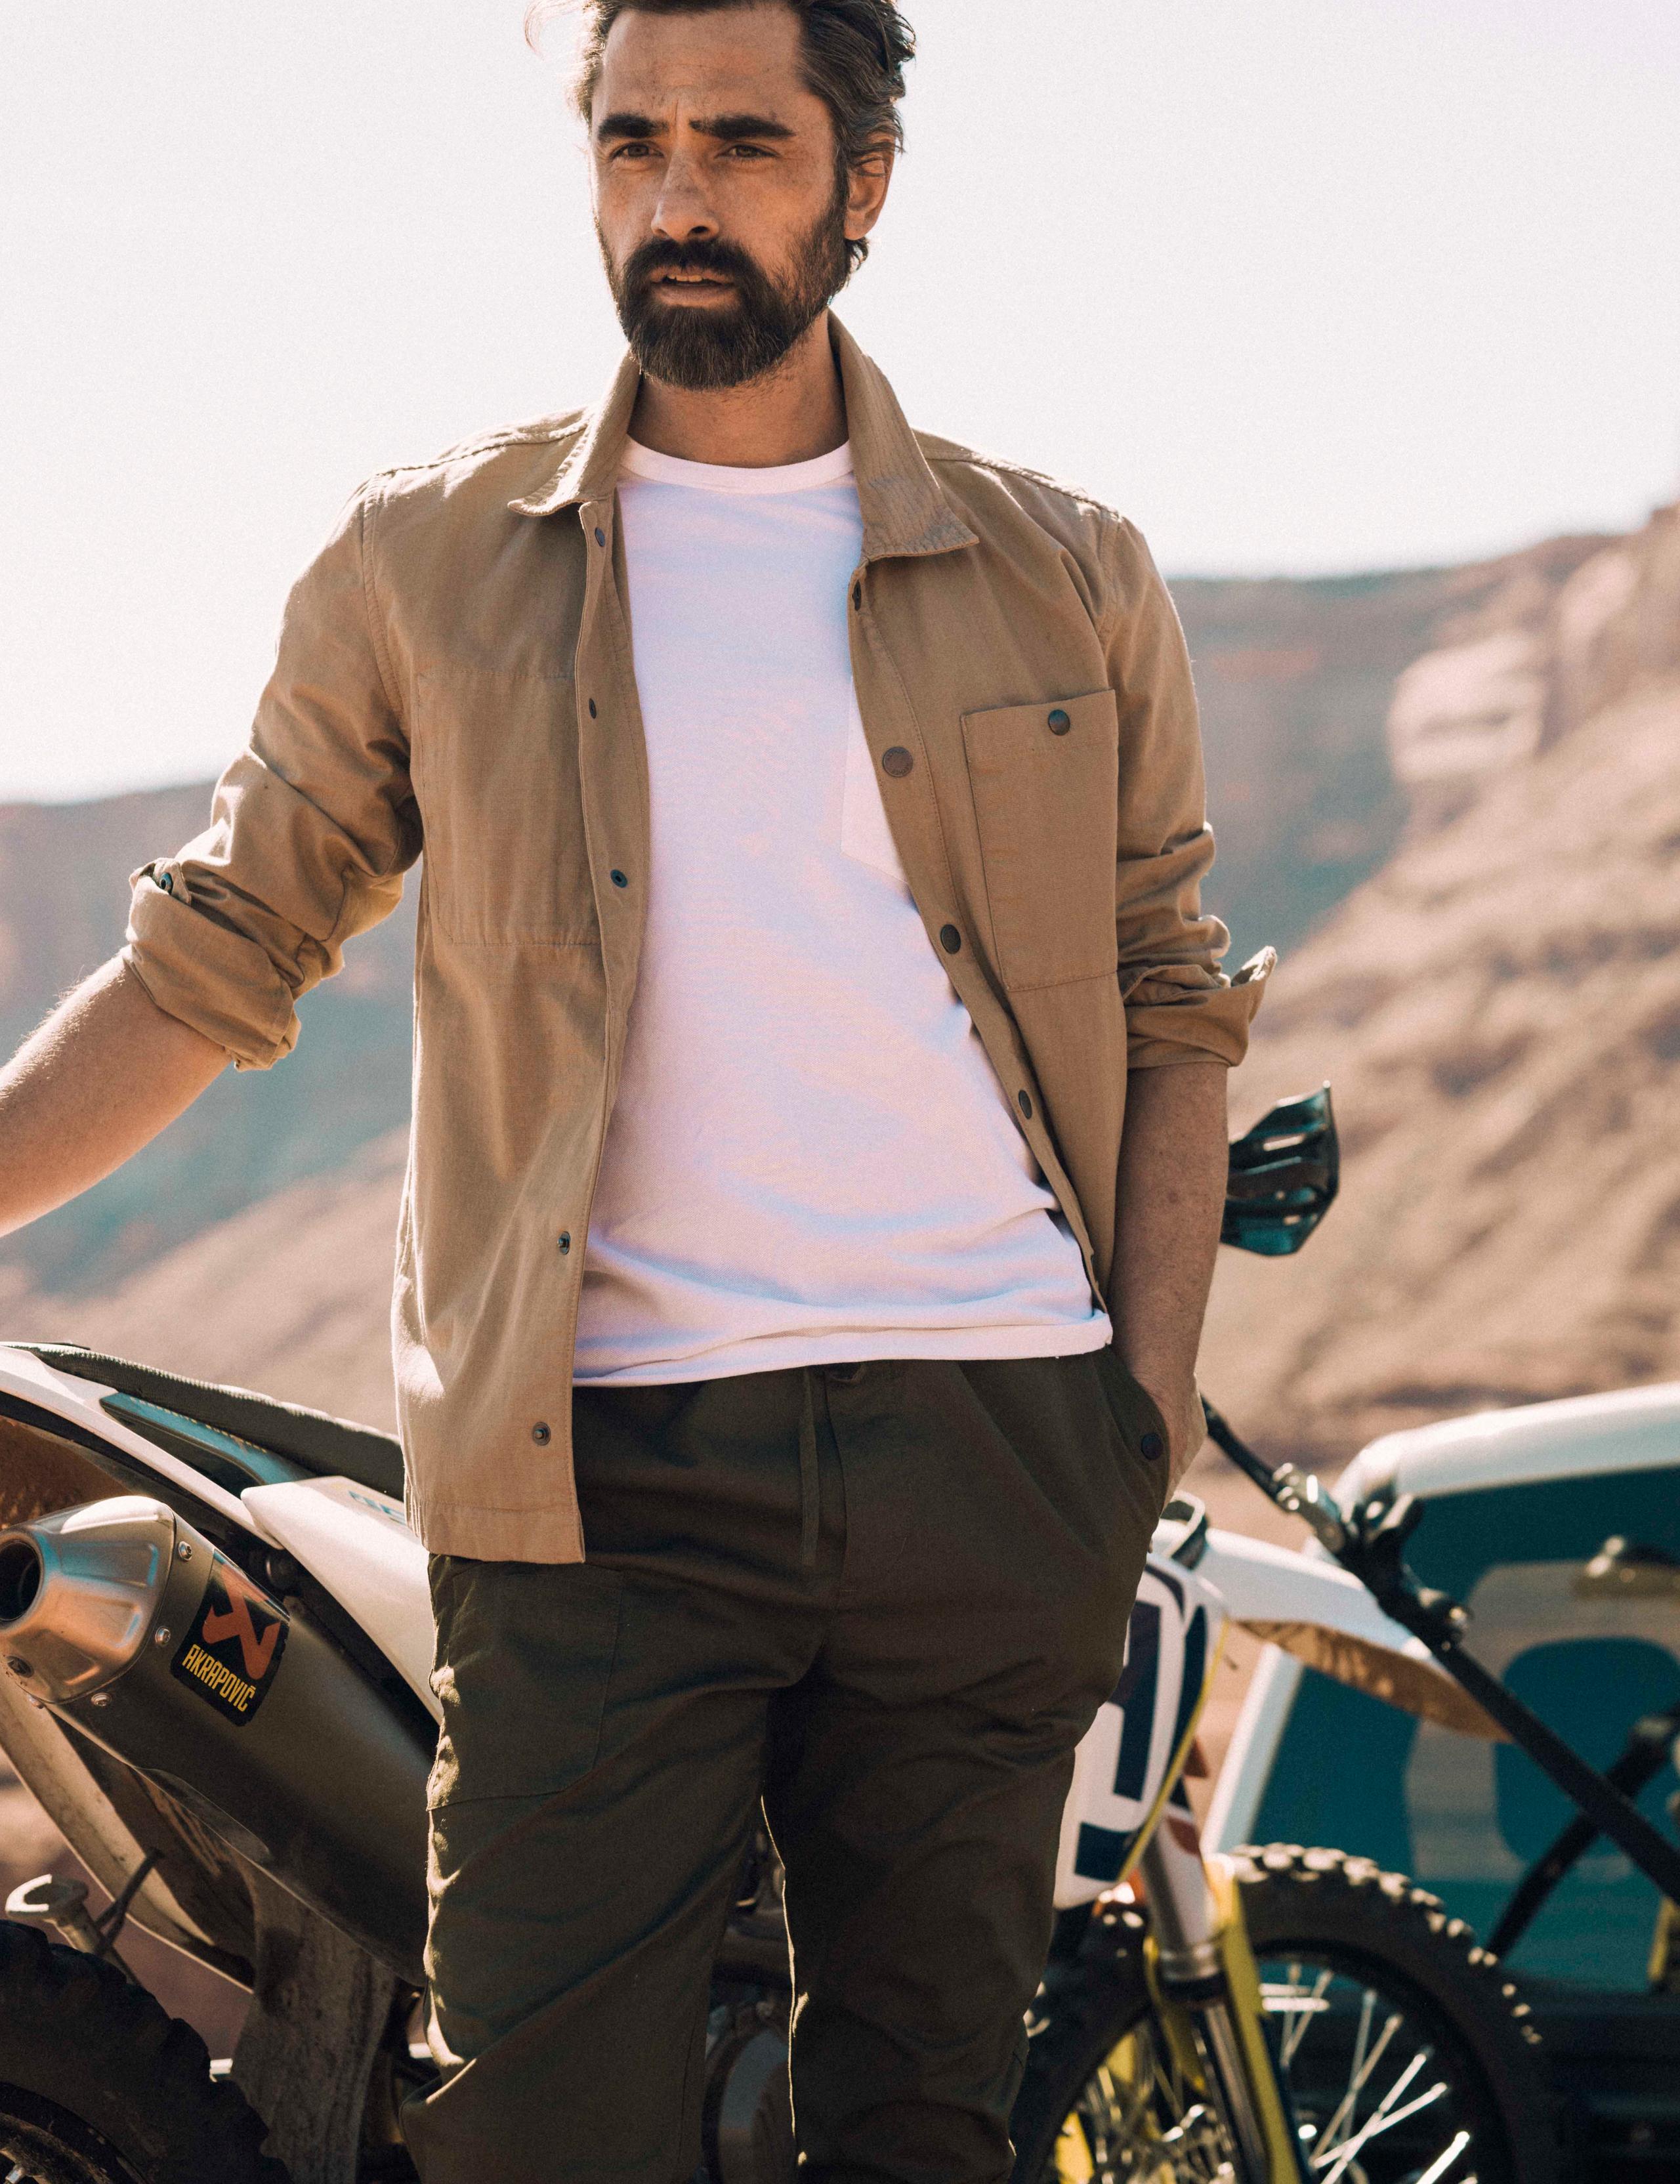 Man wearing Rapids Jacket in front of motorcycle in Moab, Utah